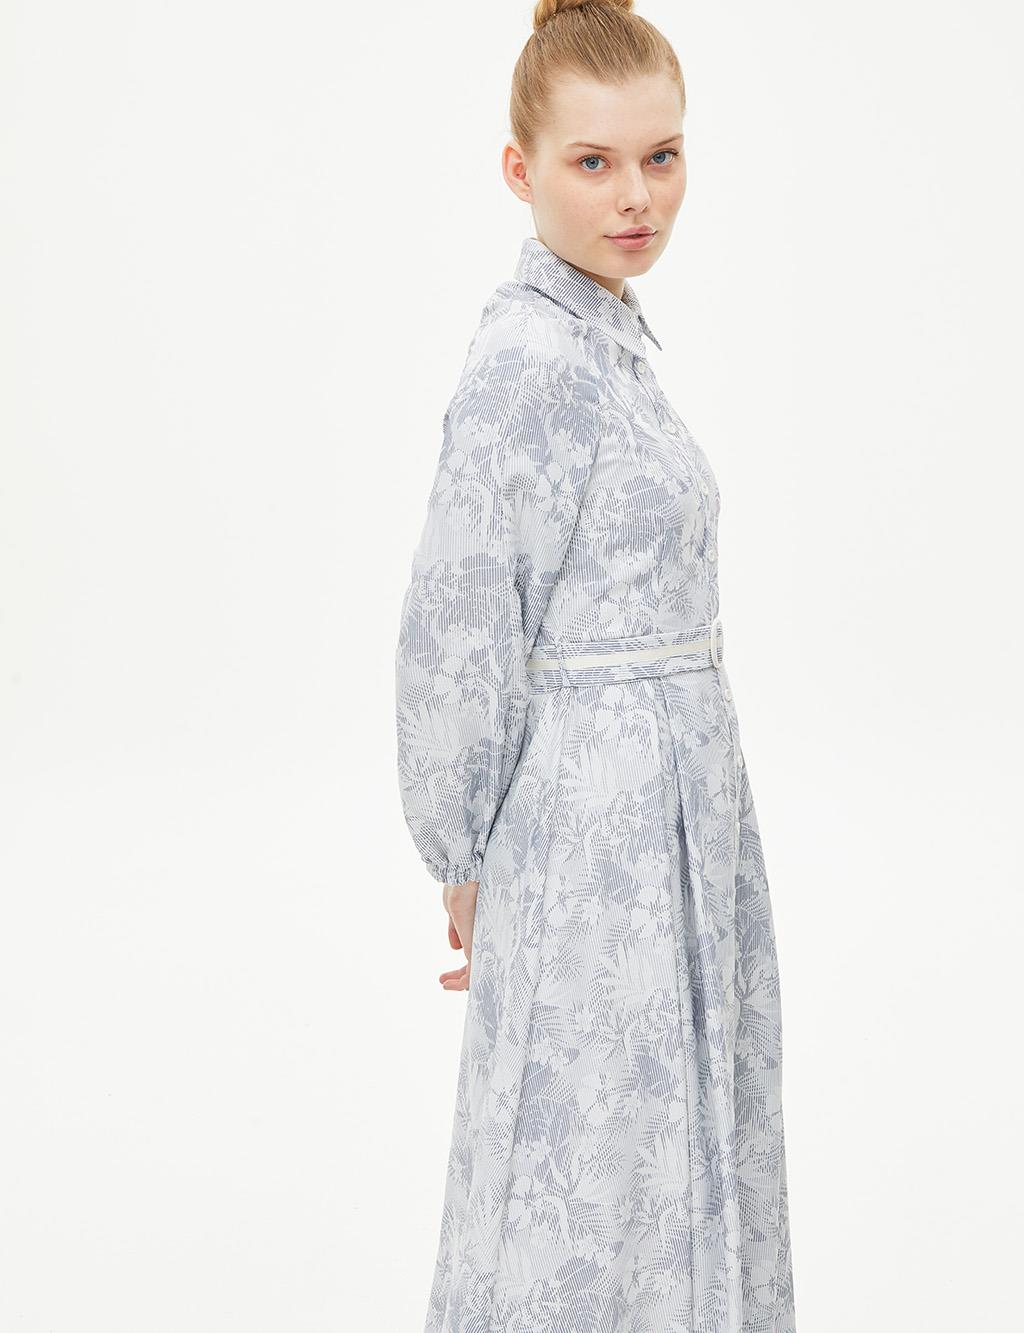 Belted Raglan Sleeve Printed Dress Navy-White